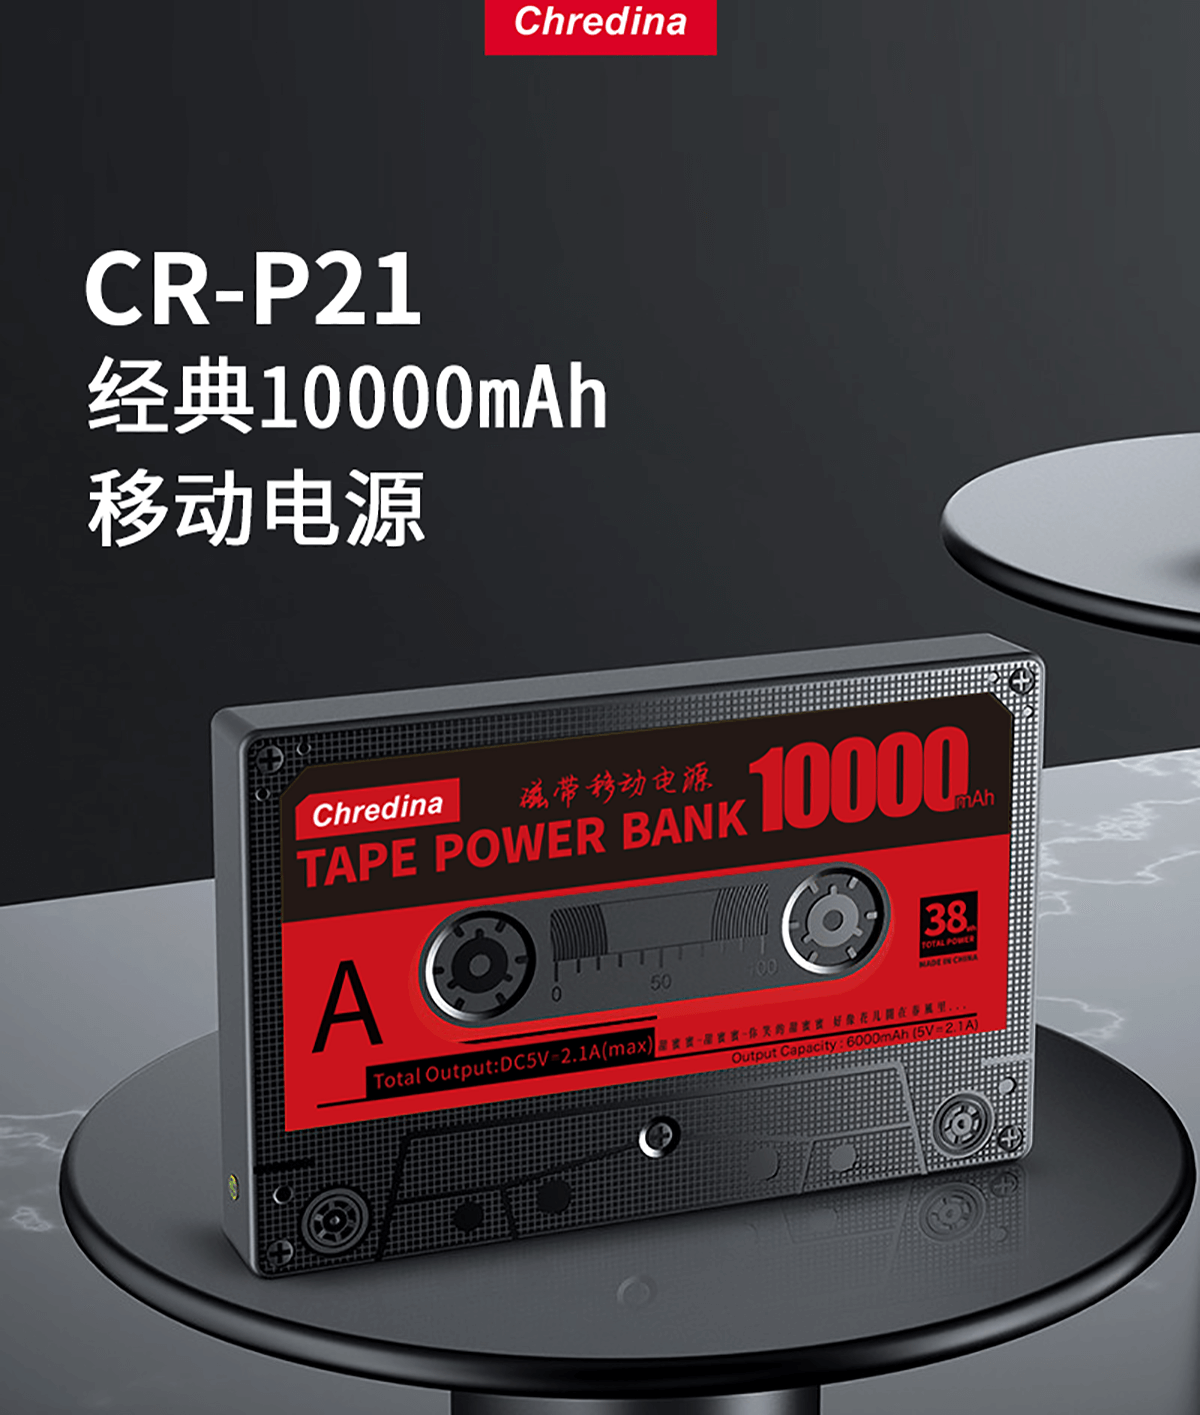 CR-P21磁带_01.png